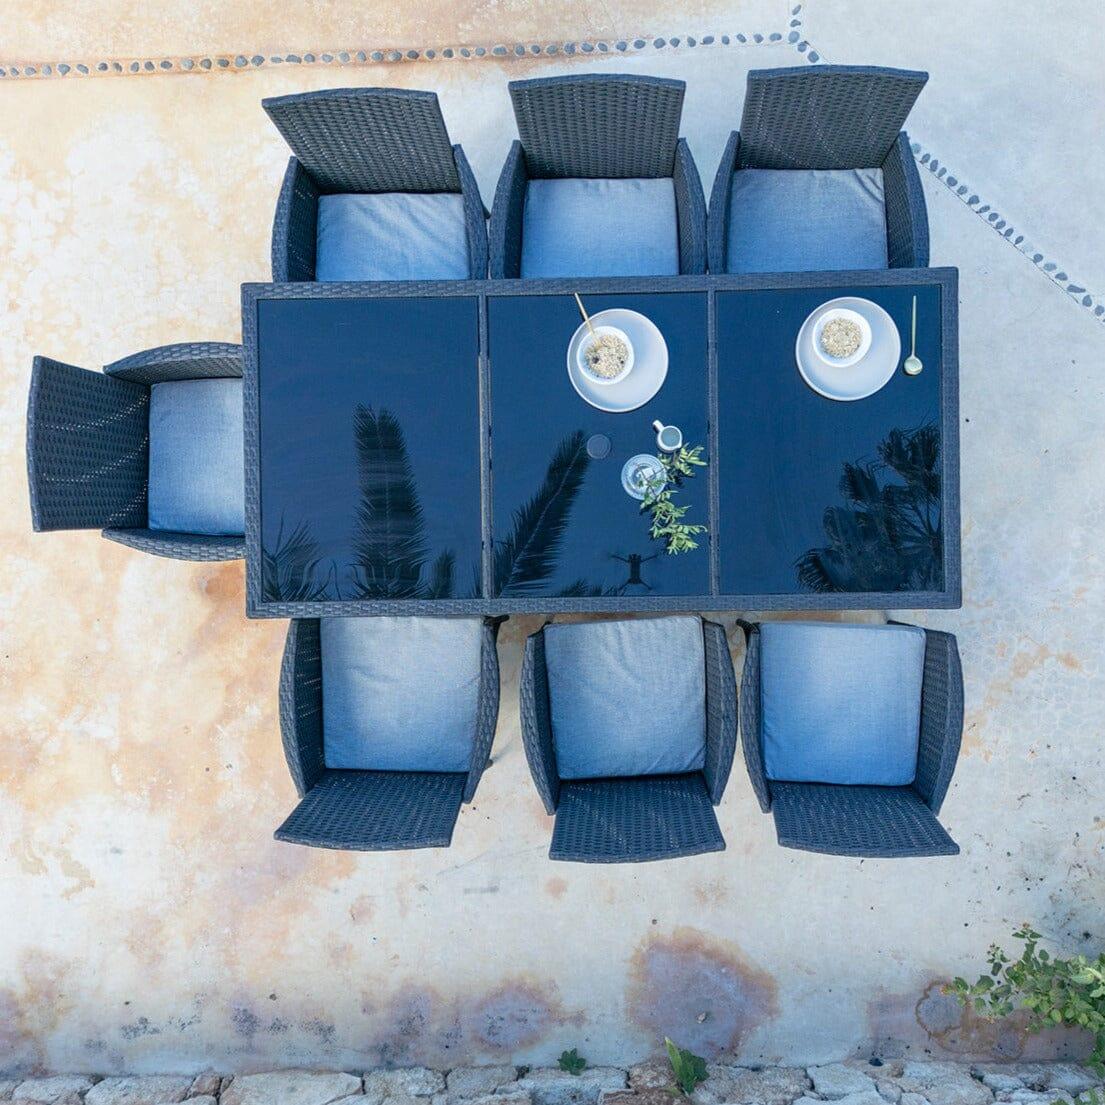 Marston 8 Seater Rattan Outdoor Dining Set with Cream Parasol - Rattan Garden Furniture - Black - Glass Top - Laura James